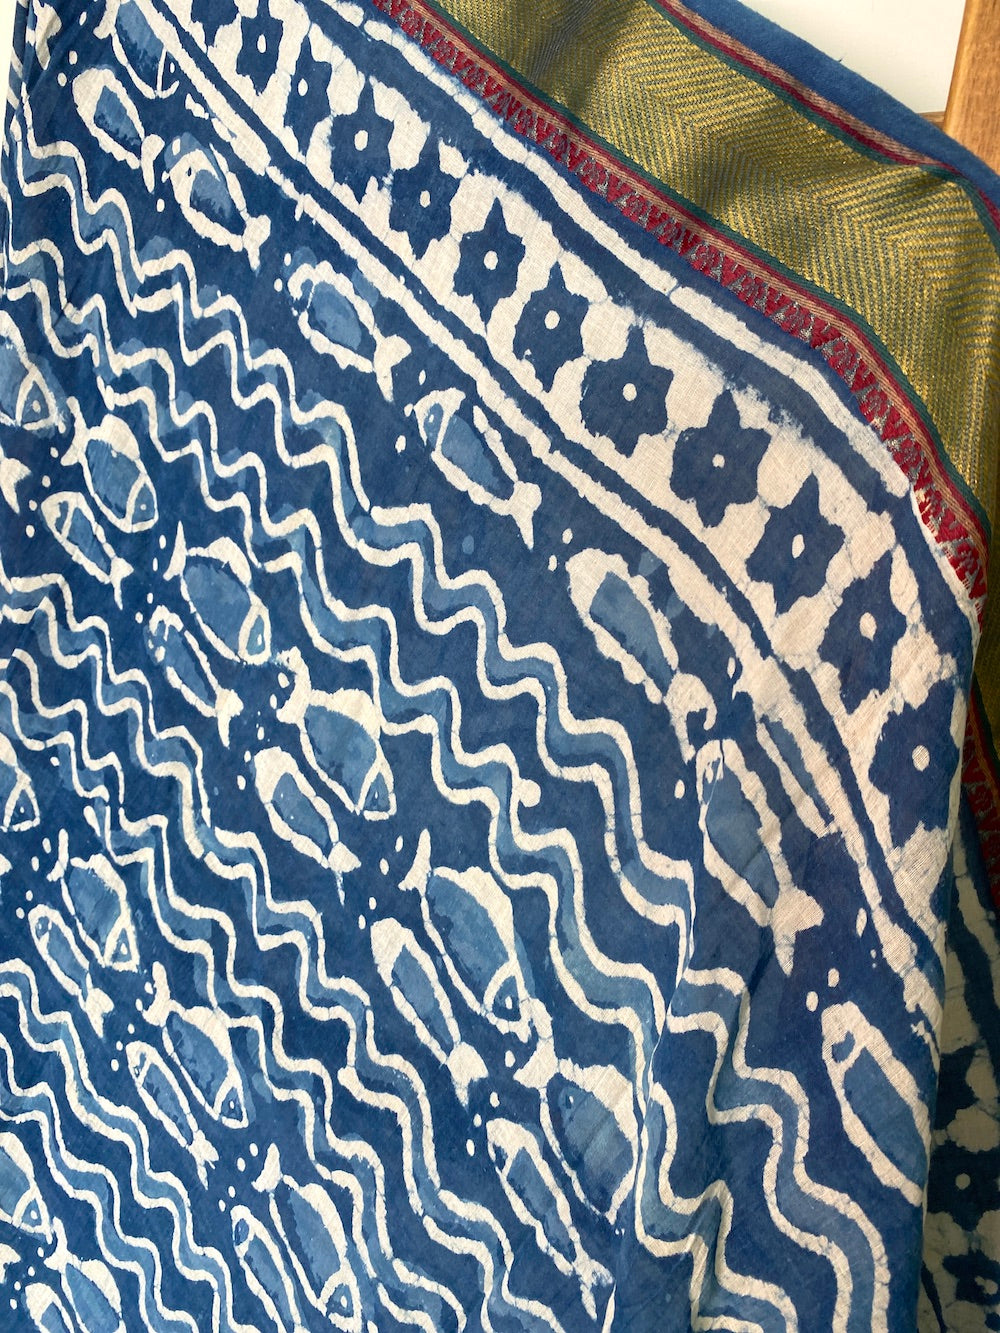 fabric detail on indigo sarong - The Fox and the Mermaid